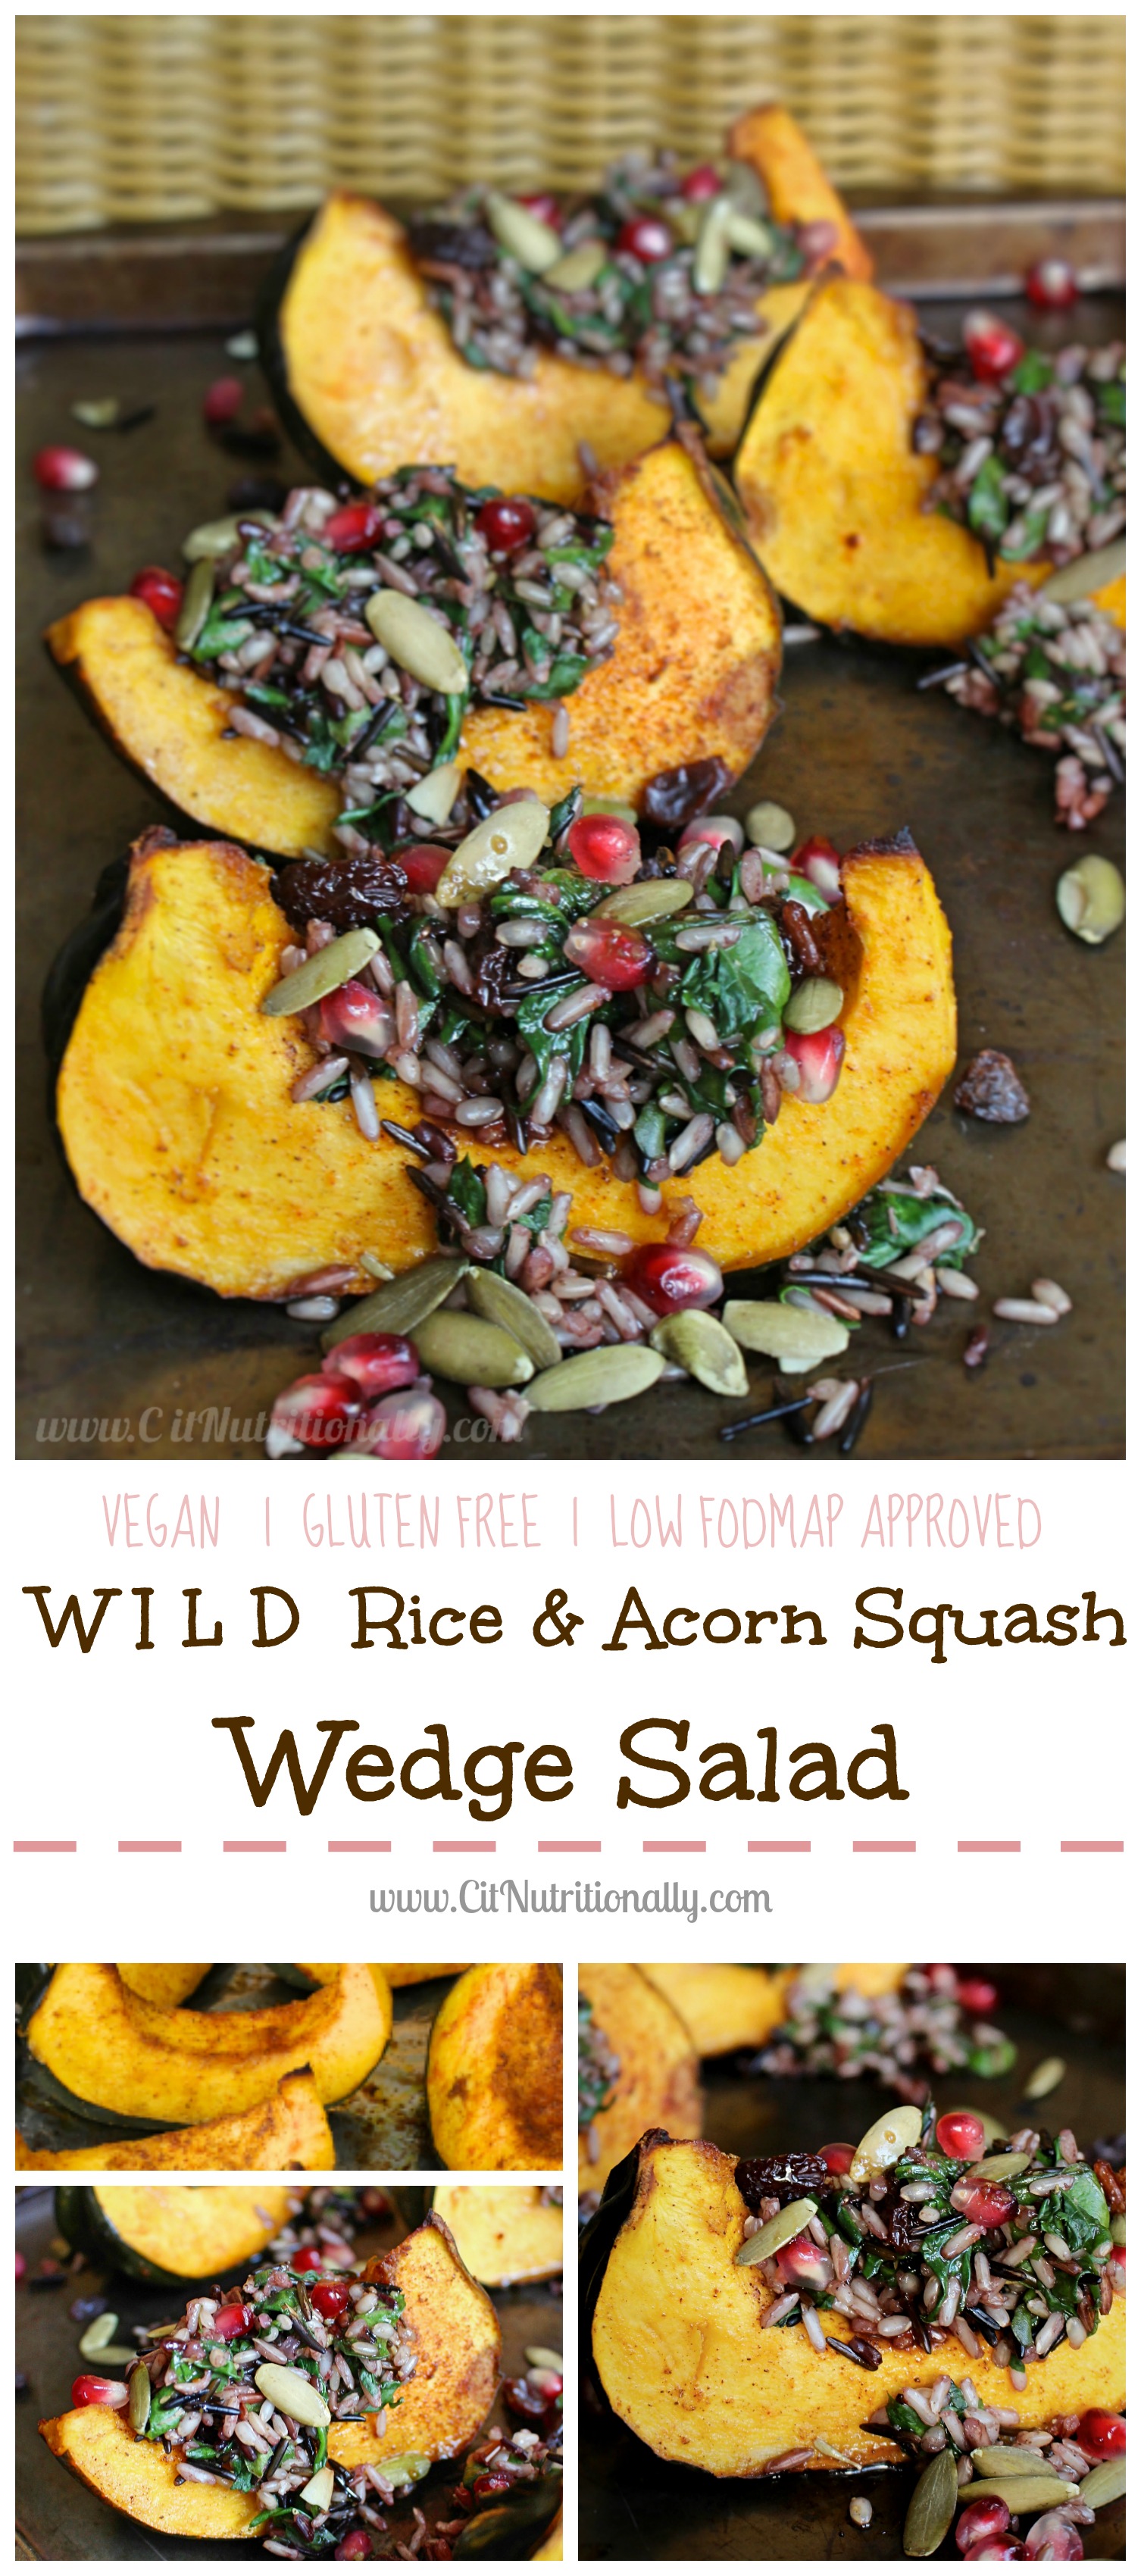 Wild Rice and Acorn Squash Wedge Salad | C it Nutritionally #vegan #glutenfree #nutfree #peanutfree